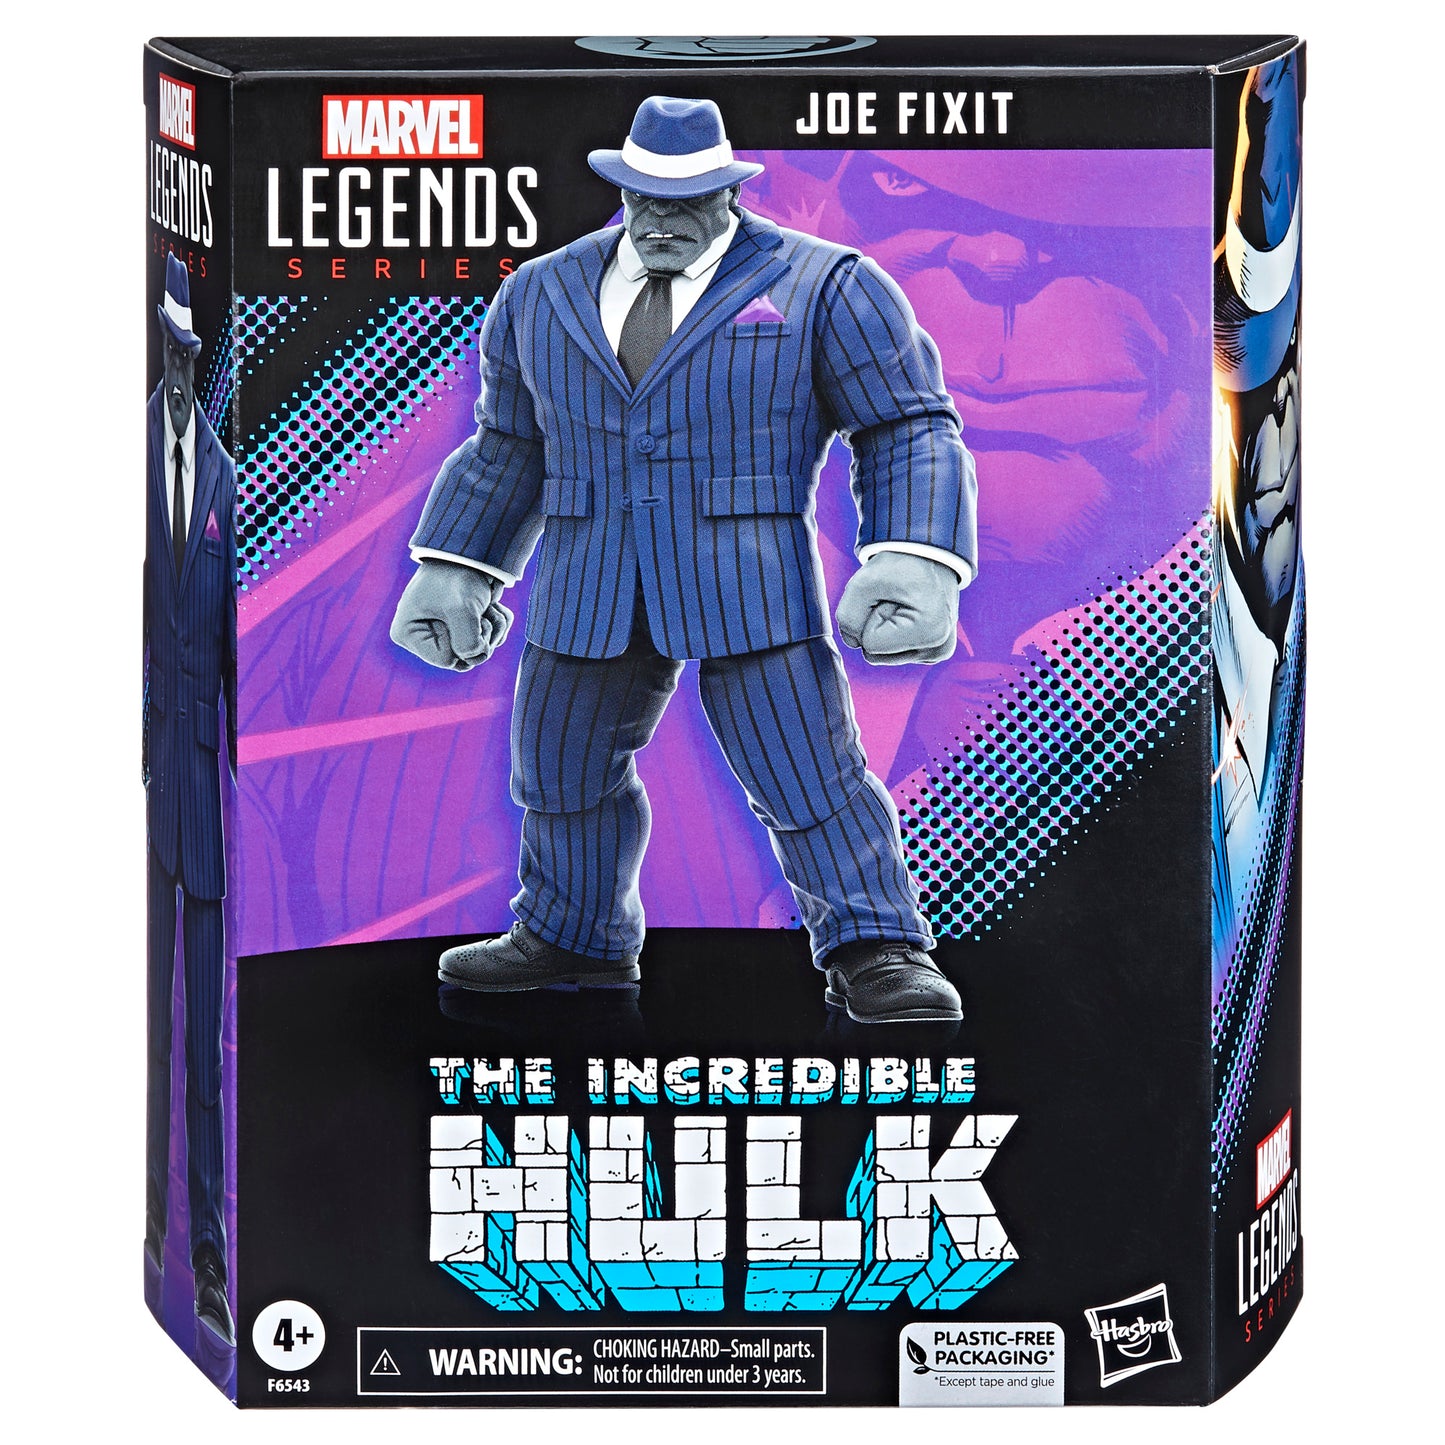 Hasbro Marvel Legends Series Joe Fixit, 6" Scale Marvel Legends Action Figure